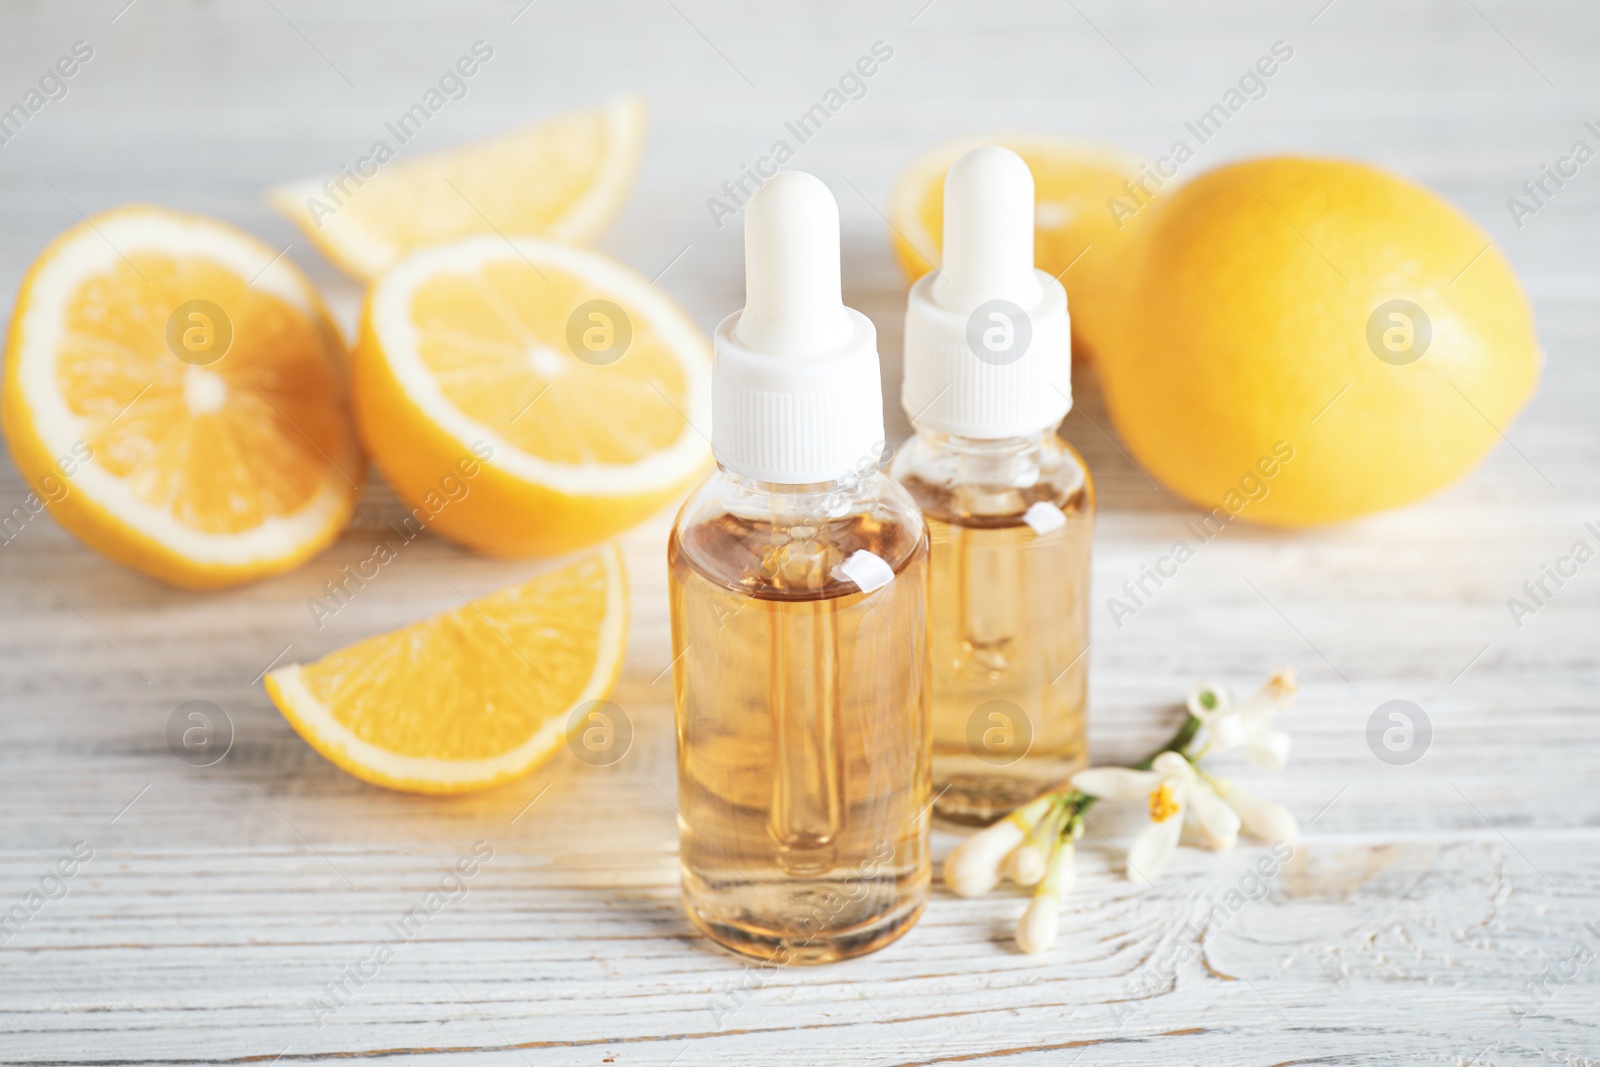 Photo of Bottles of citrus essential oil, flower and lemons on white wooden table